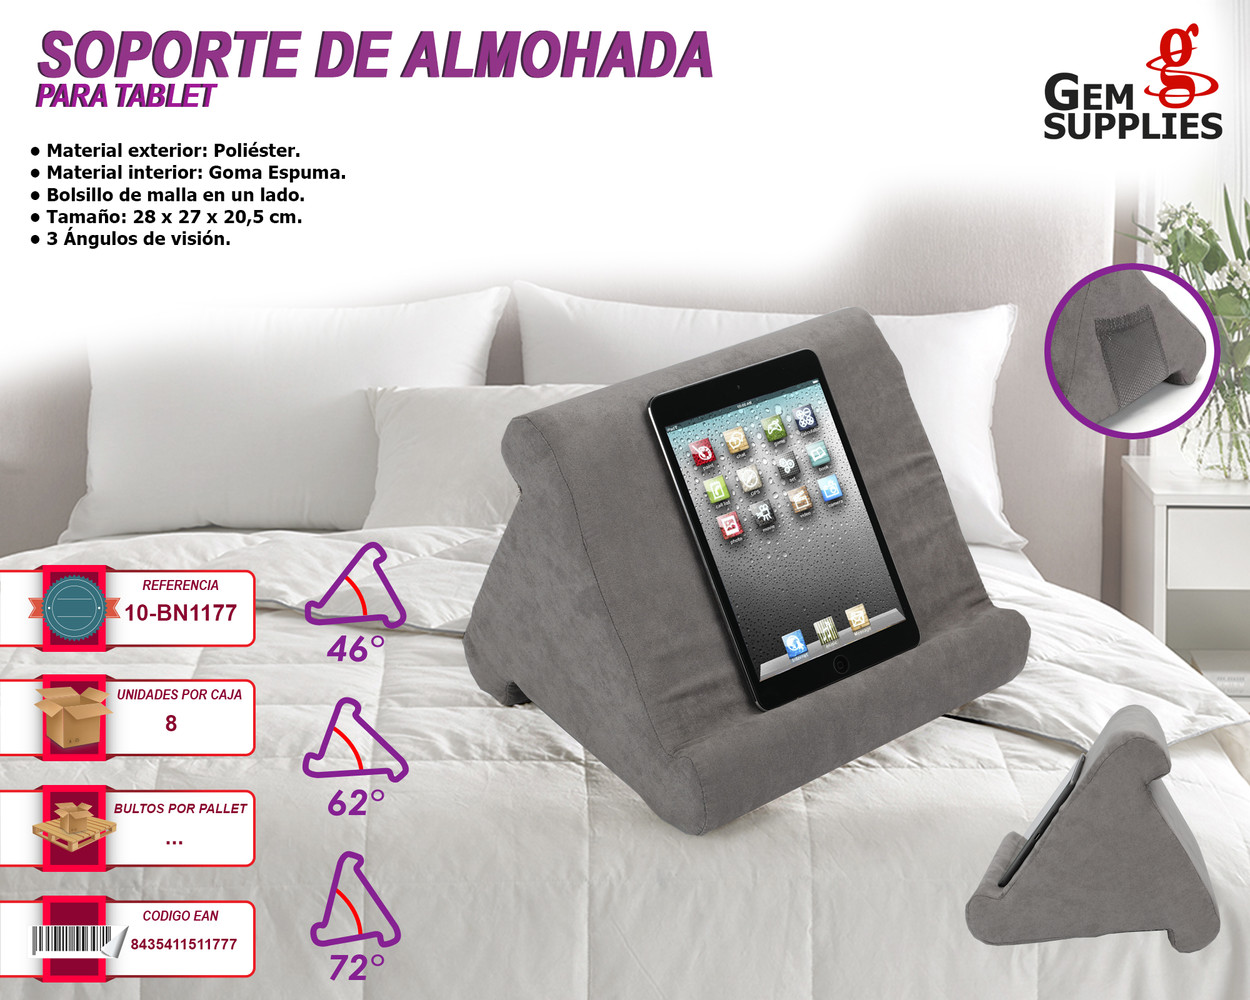 Soporte para tableta, soporte para almohada para tableta